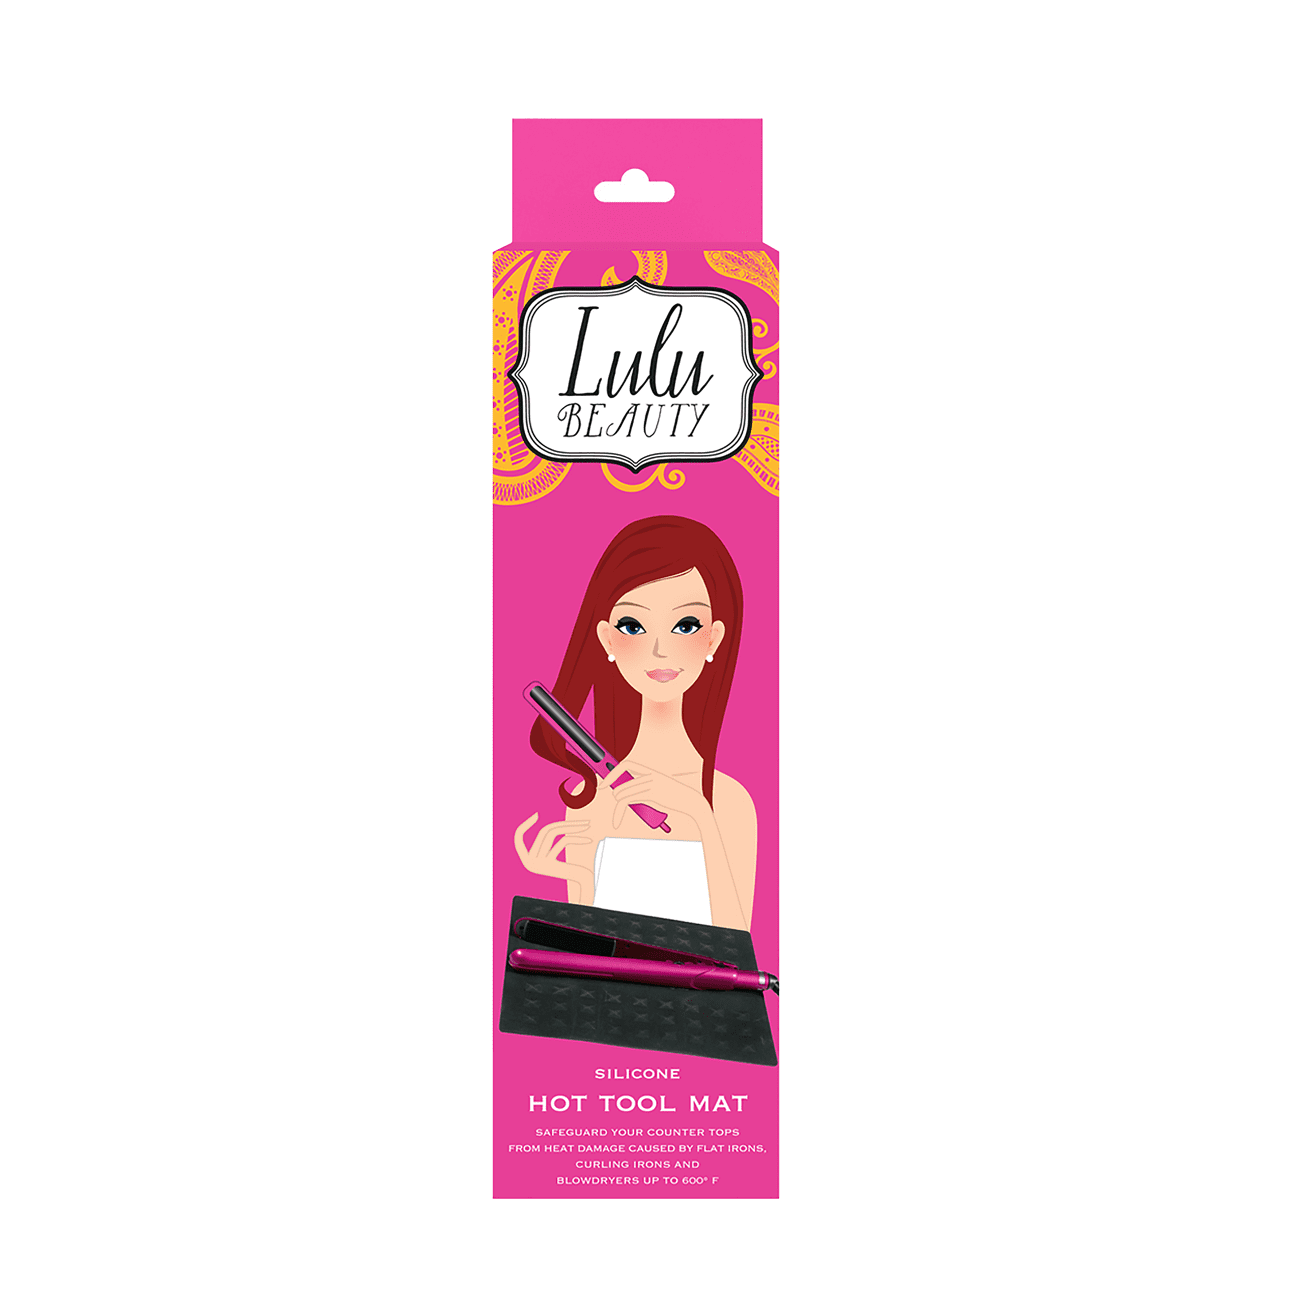 Lulu Beauty Silicone Hot Tool Mat